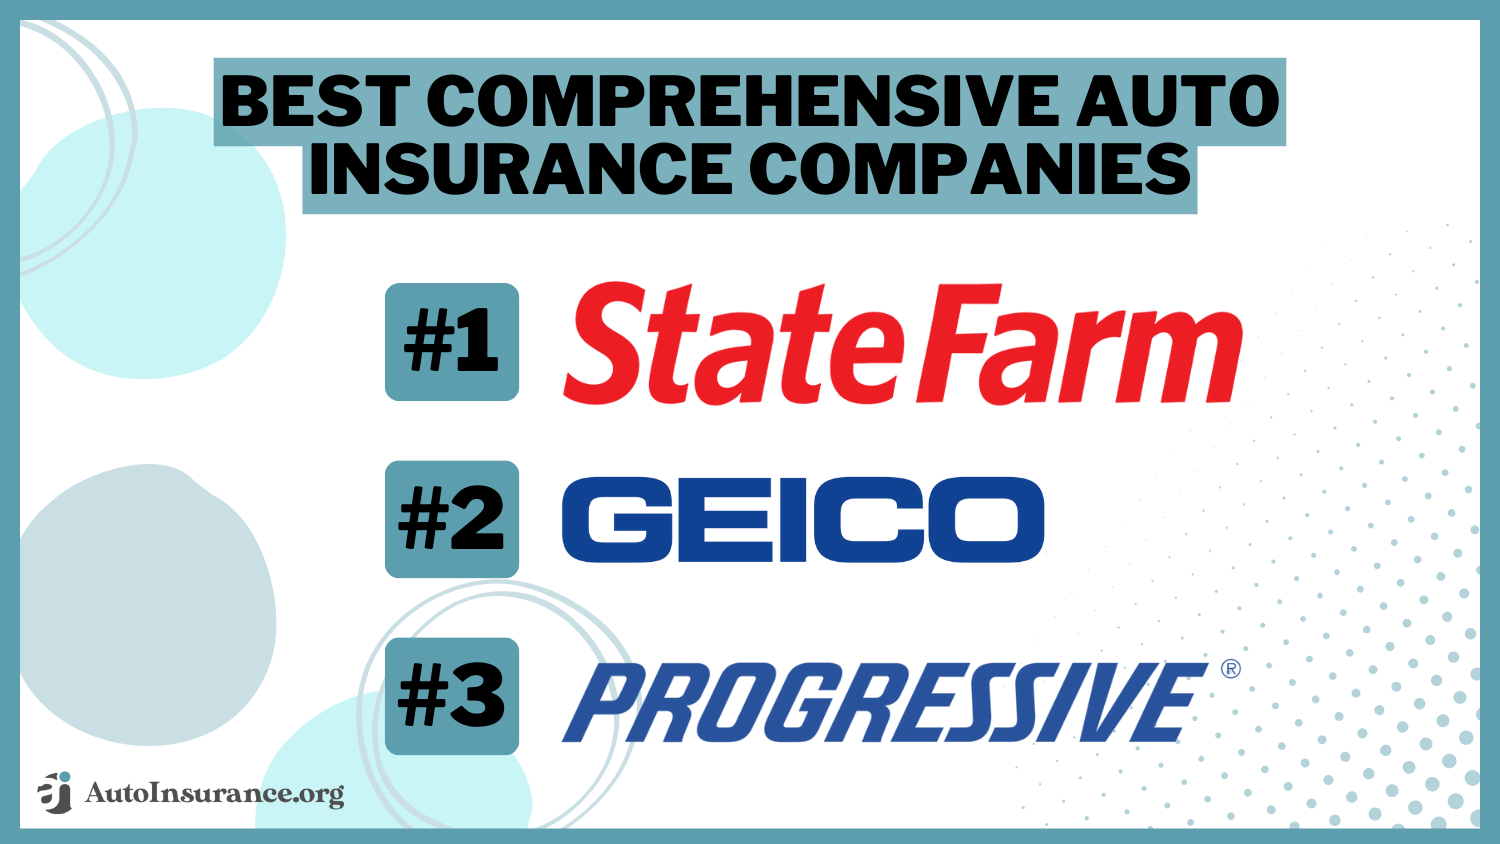 State Farm, Geico, and Progressive: Best Comprehensive Auto Insurance Companies